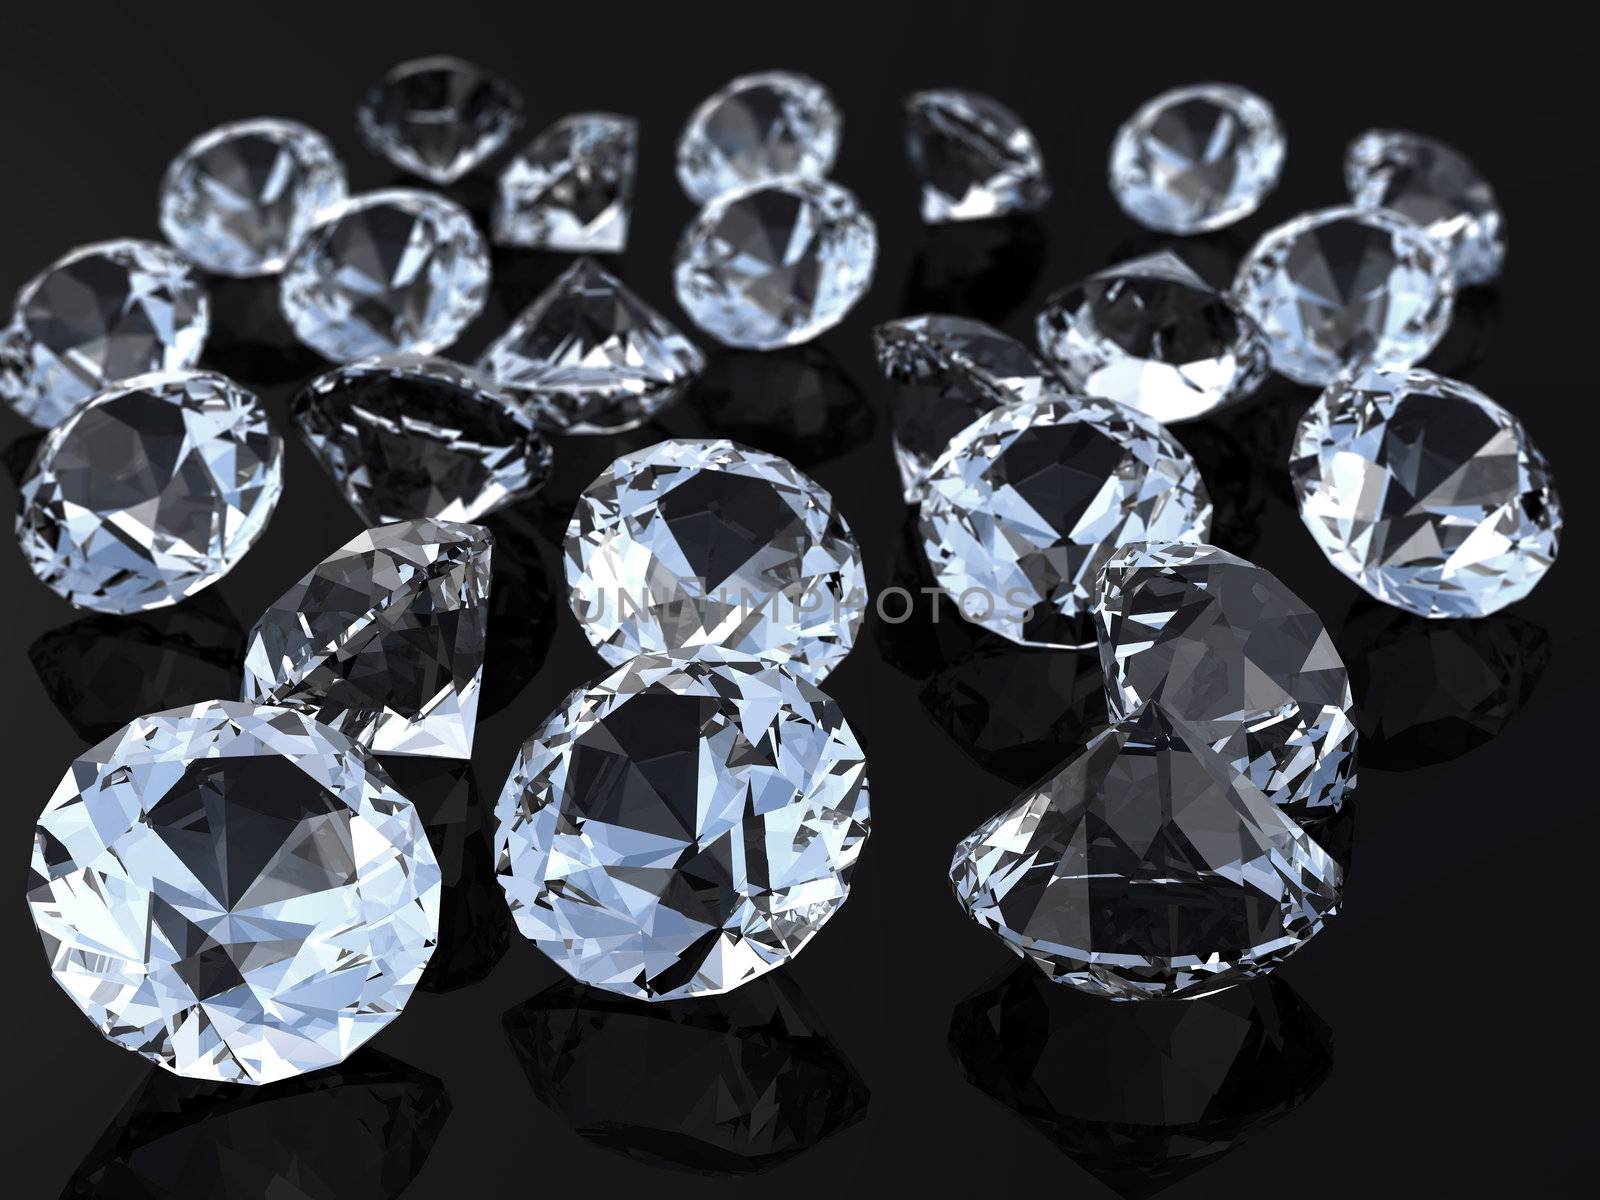 Many diamonds on a table